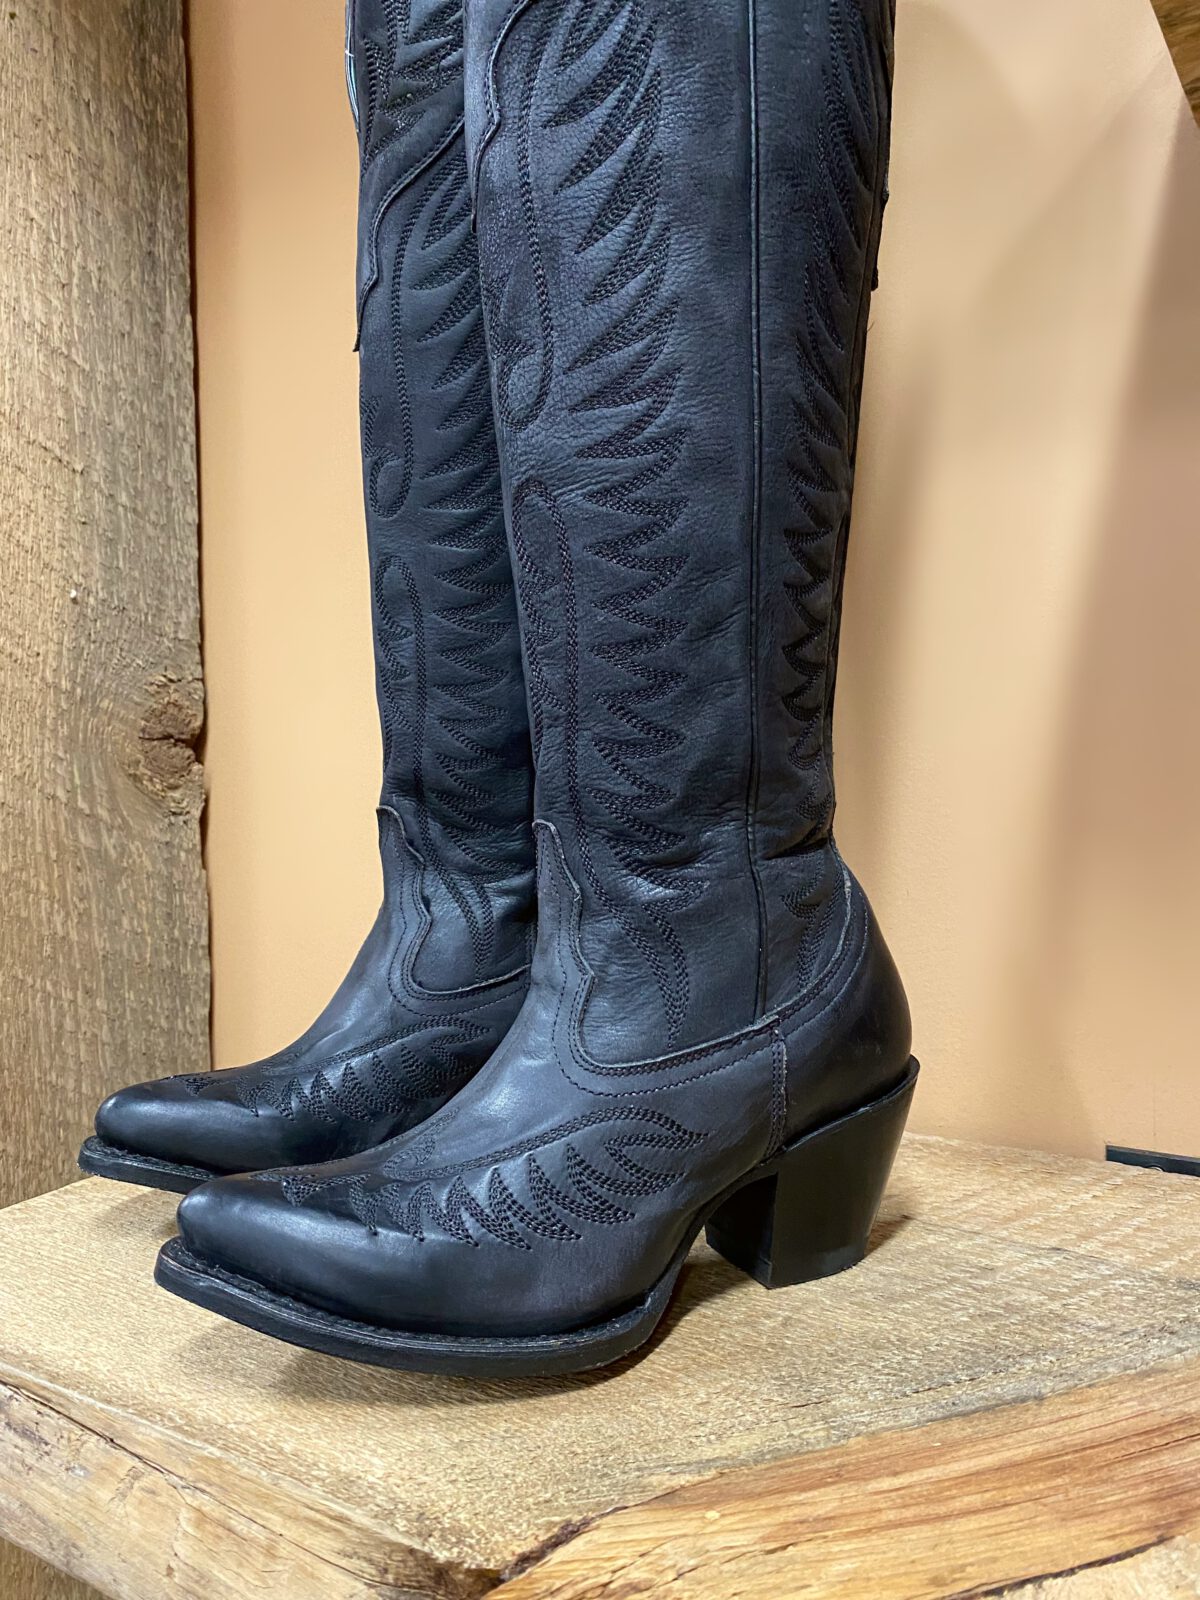 Corral – Embroidery Knee High Cowgirl Boots (Black) – El Potrerito